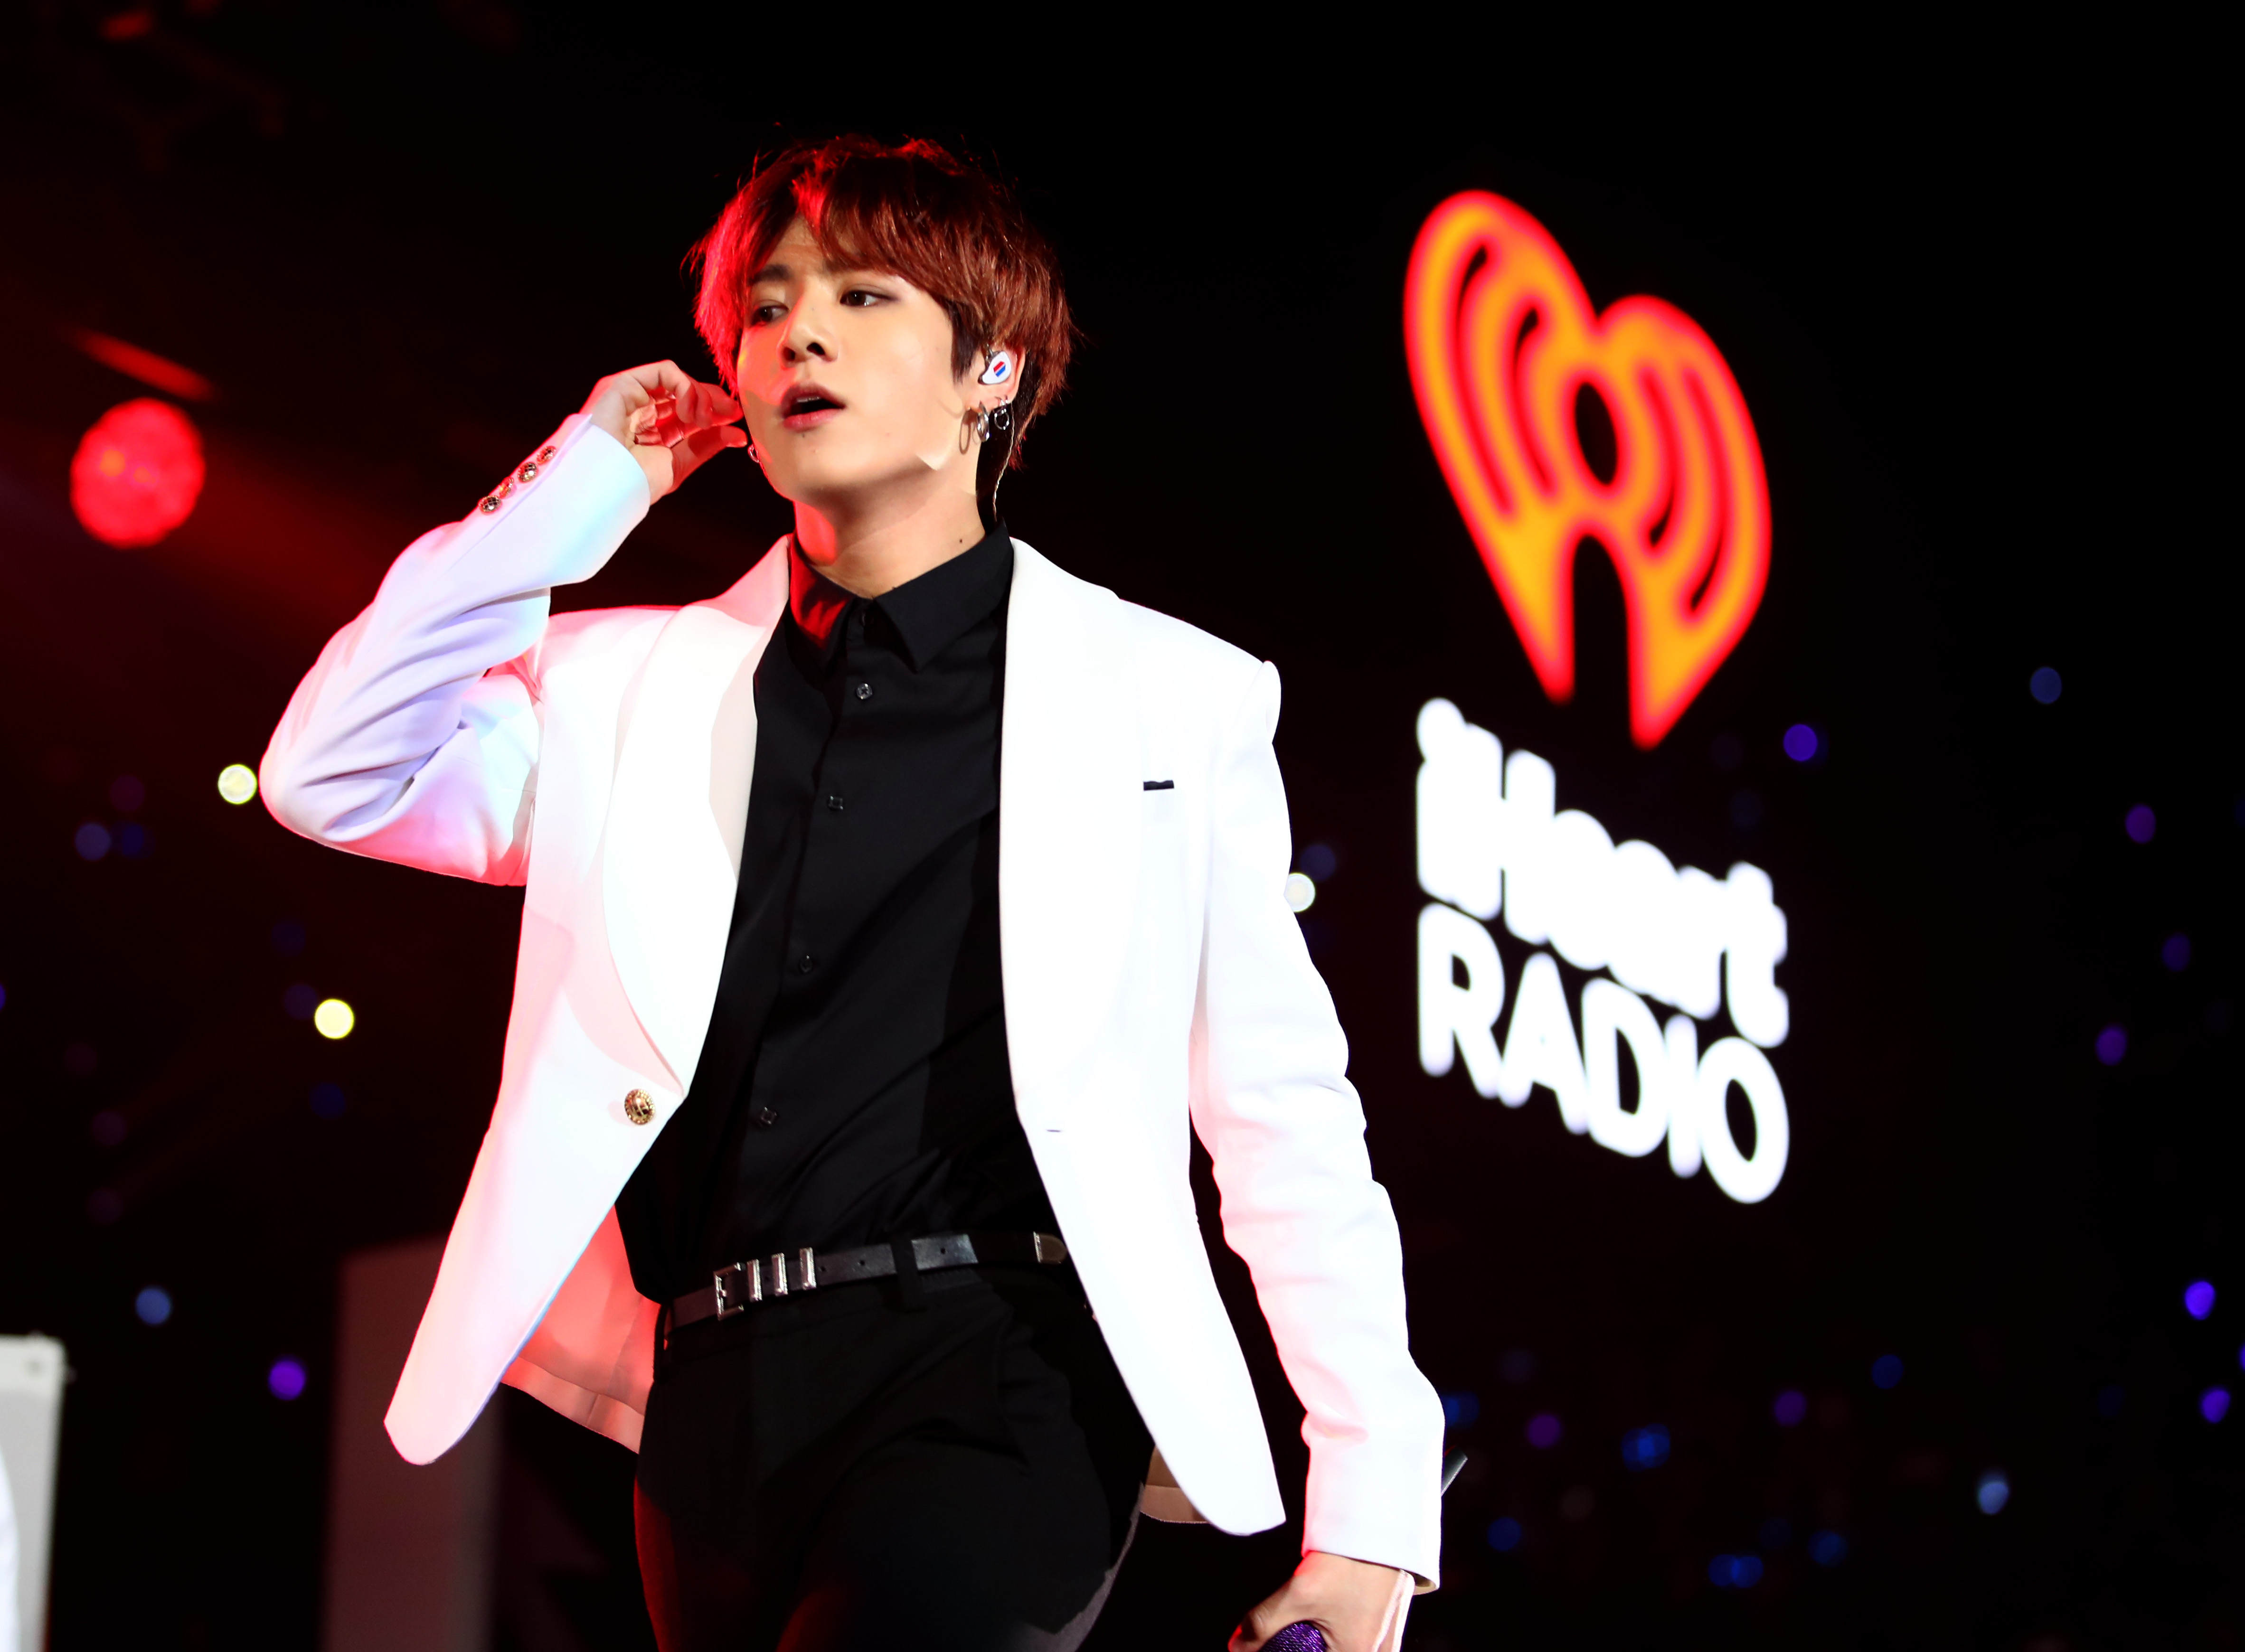 Jungkook of BTS walks onstage at the 102.7 KIIS FM's Jingle Ball 2019